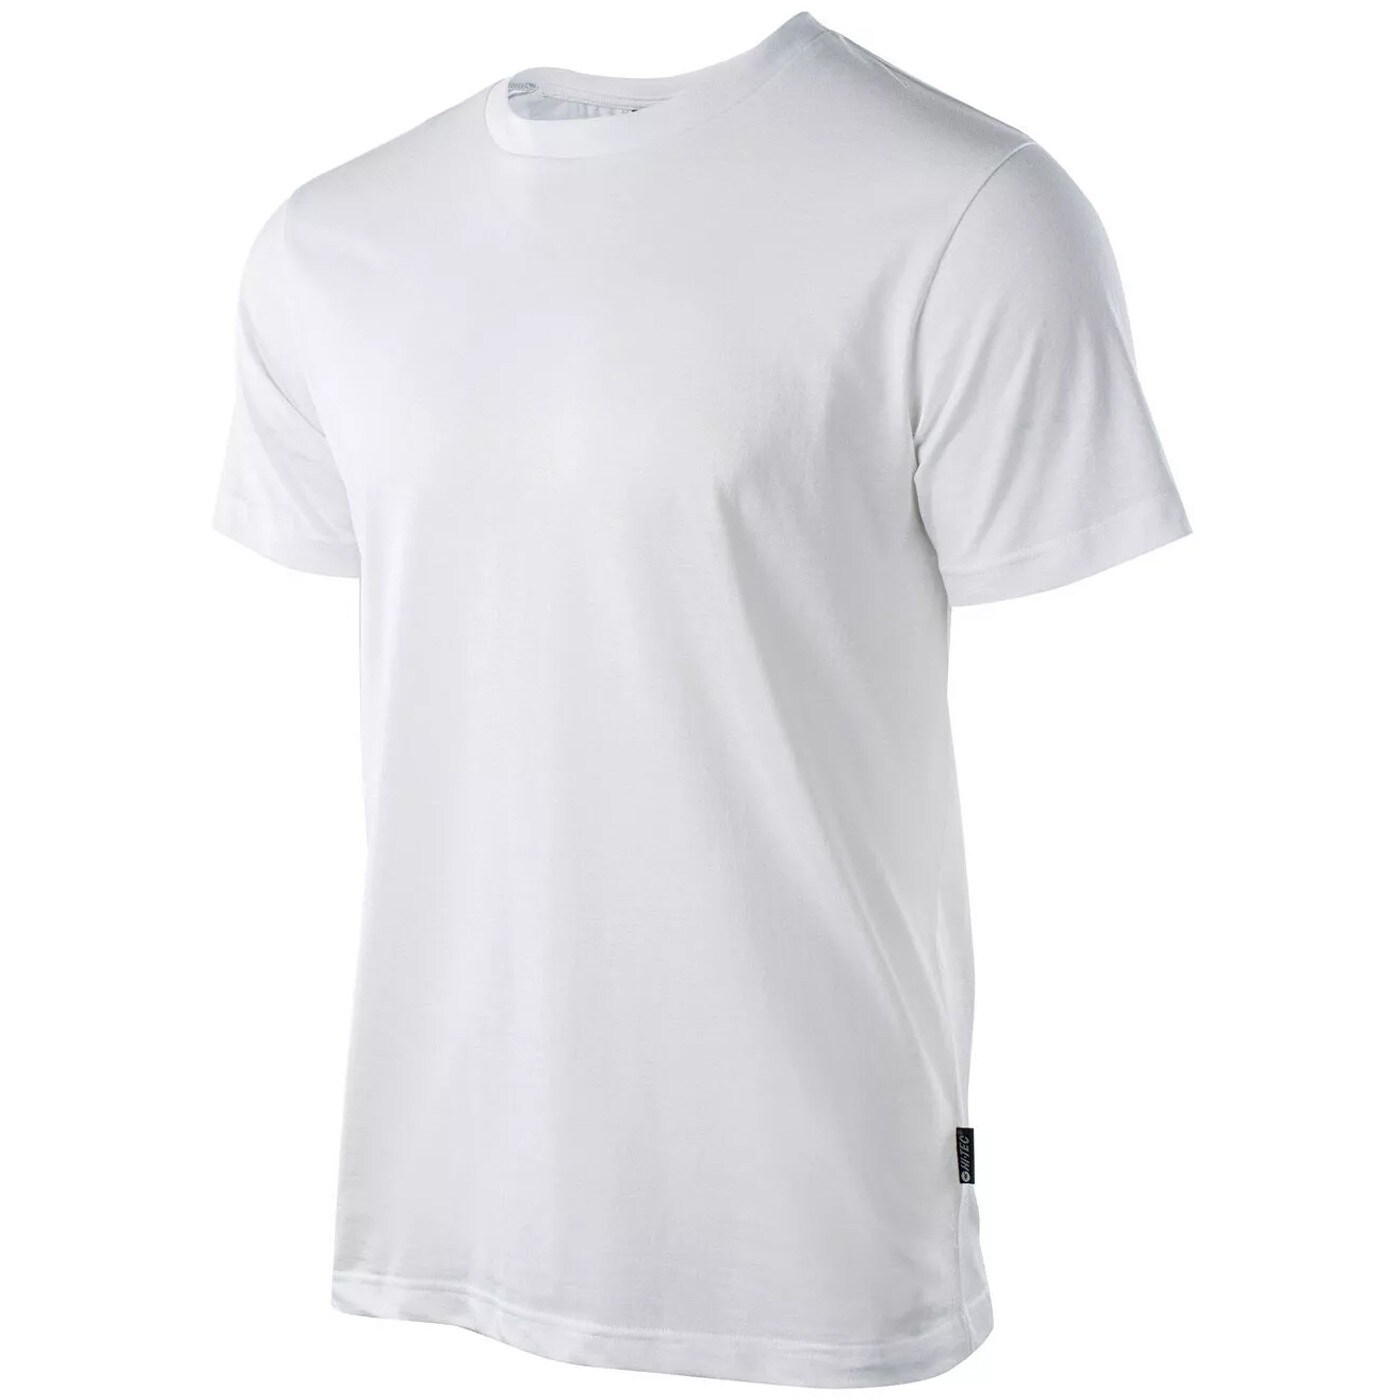 Koszulka T-shirt Hi-Tec Plain - White